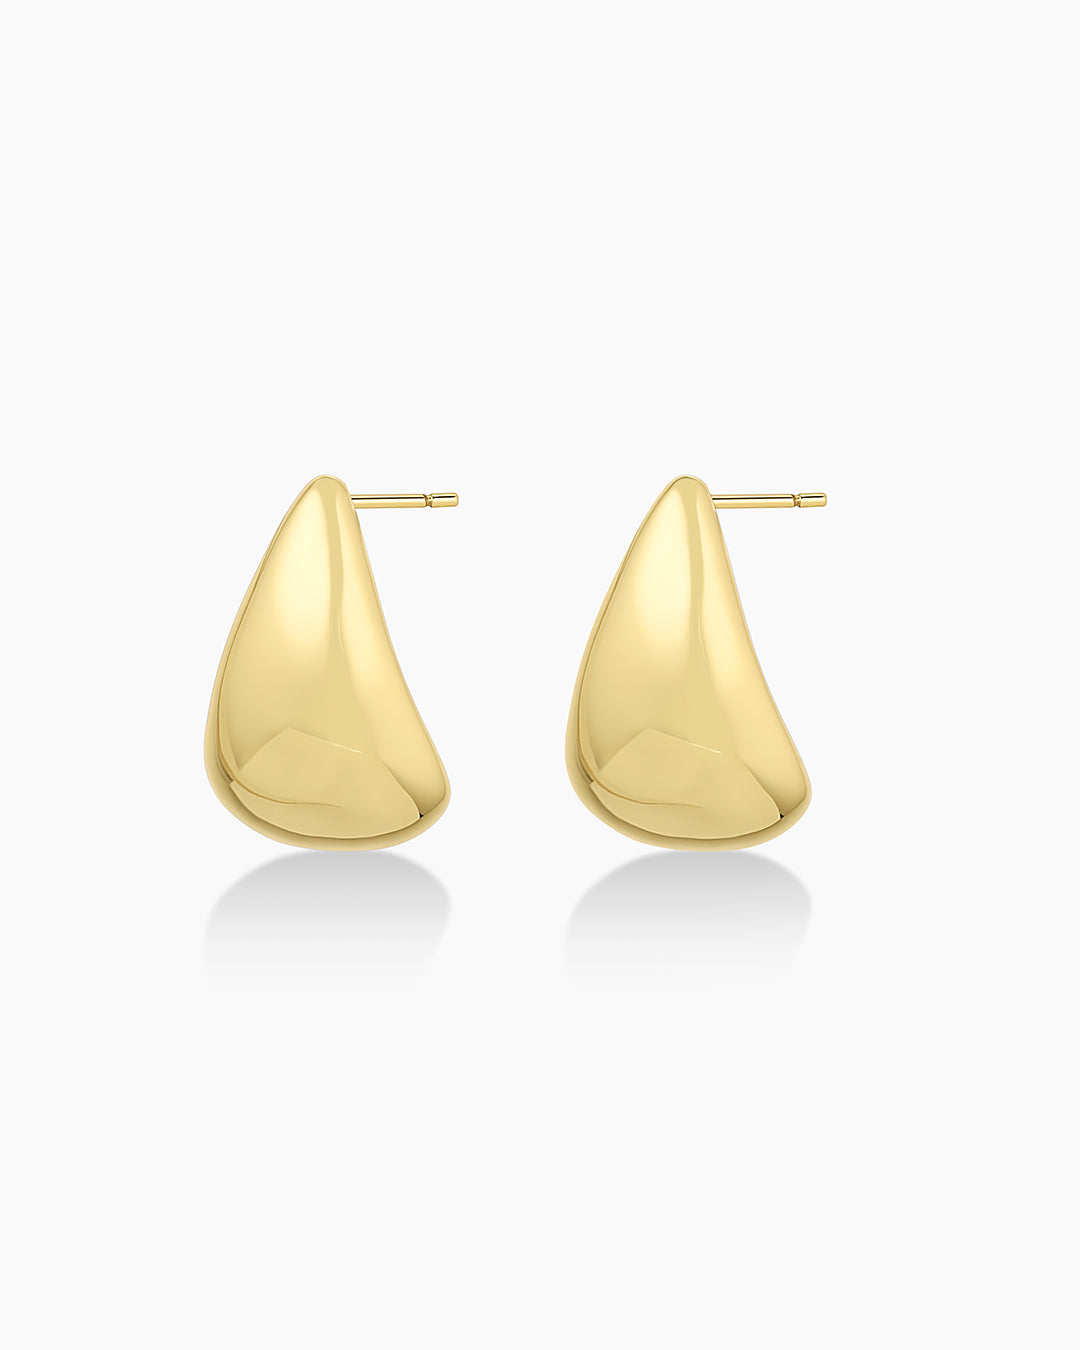 Buy Flower Design Simple Latest Daily Wear Gold Earrings Designs